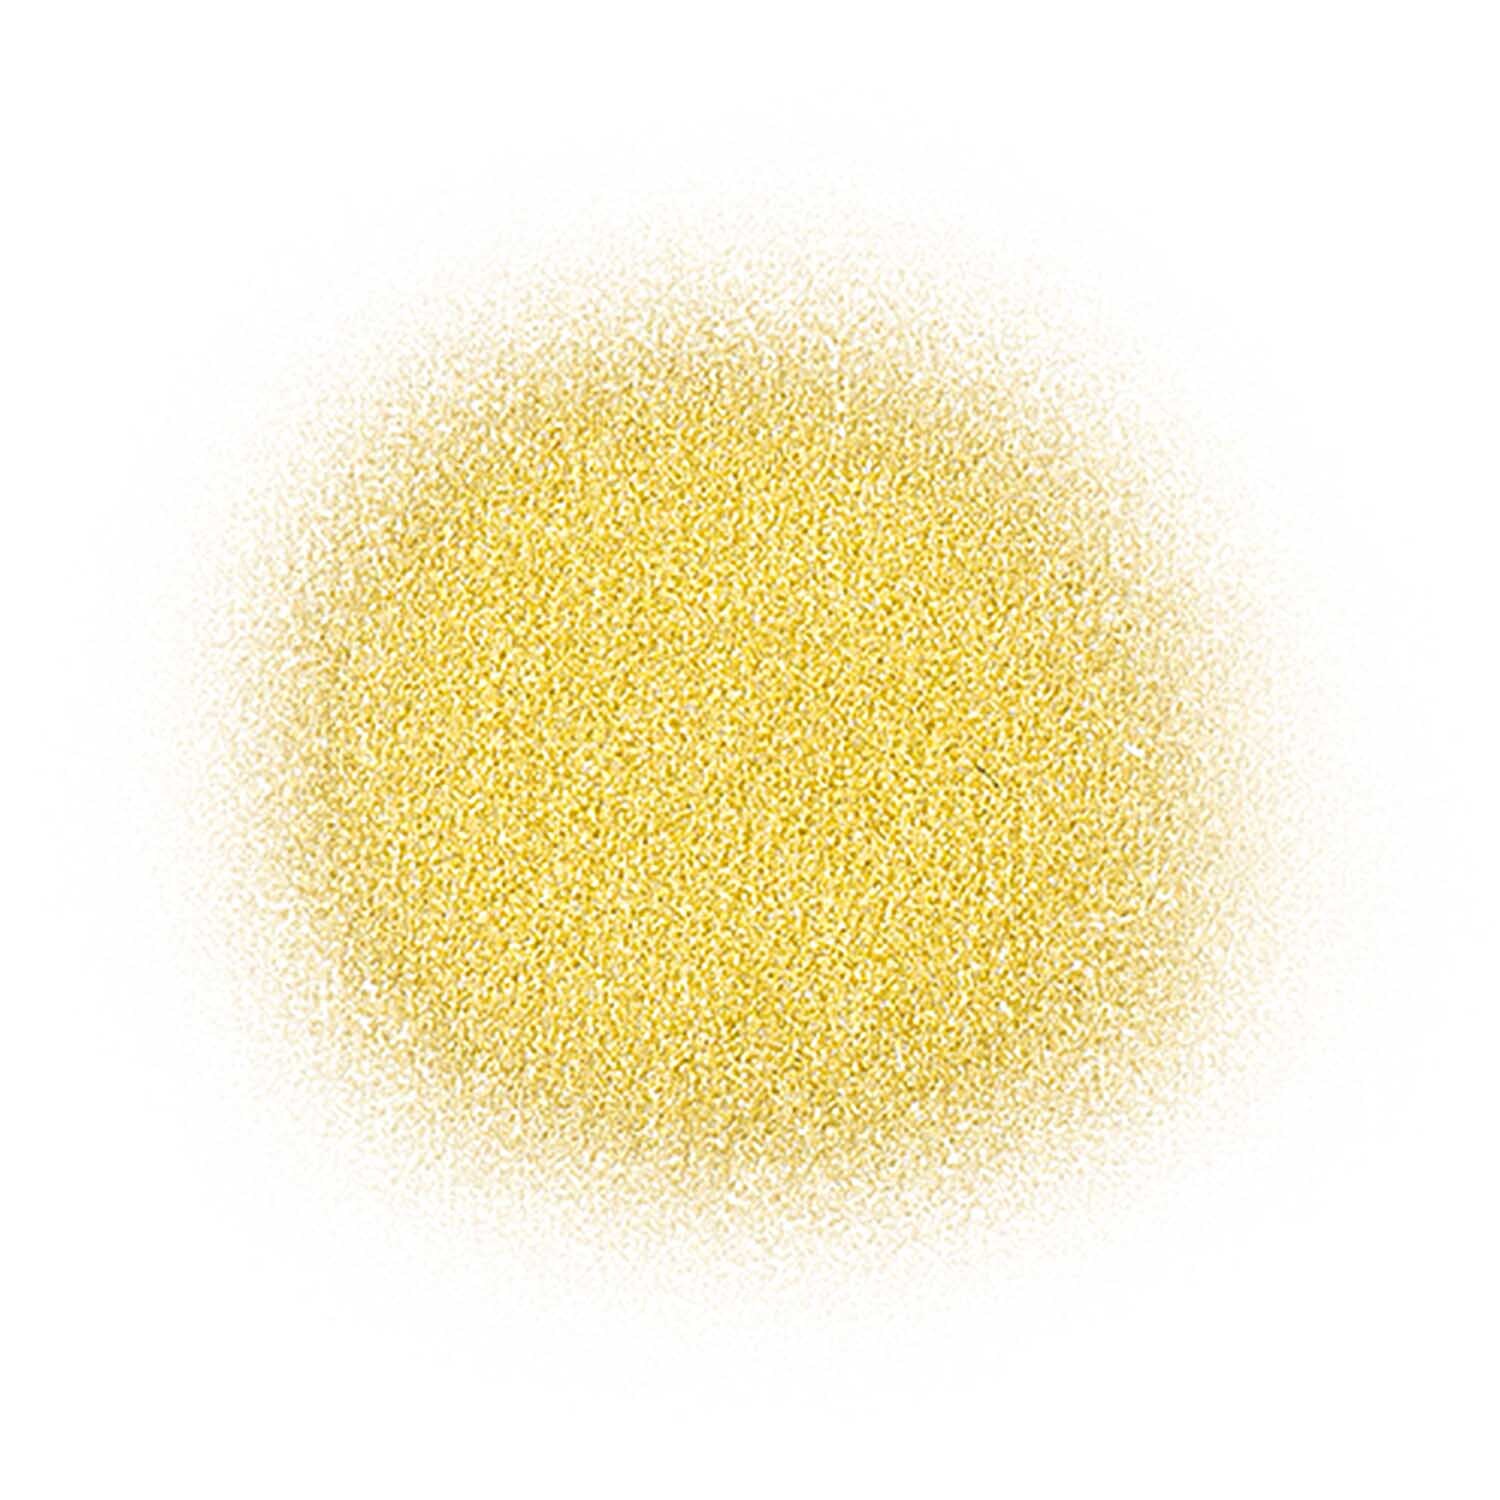 Textil Spray gold 150ml